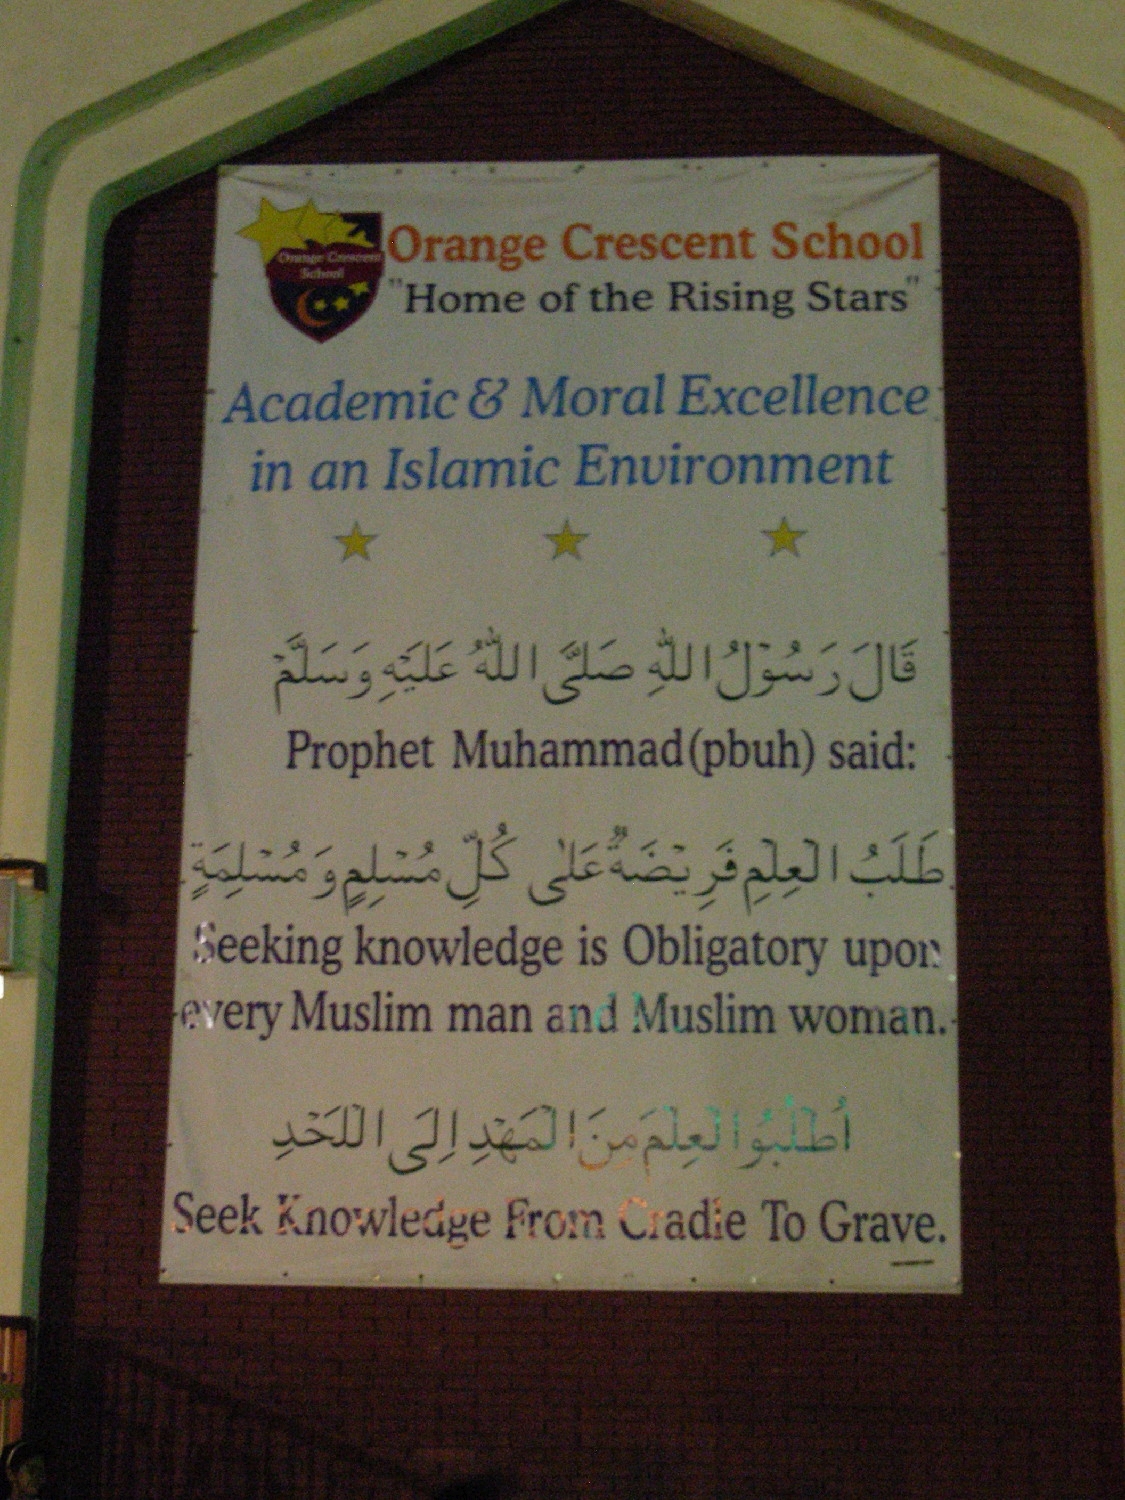 Islamic Society of Orange County - Sign for adjoining Orange Crescent School